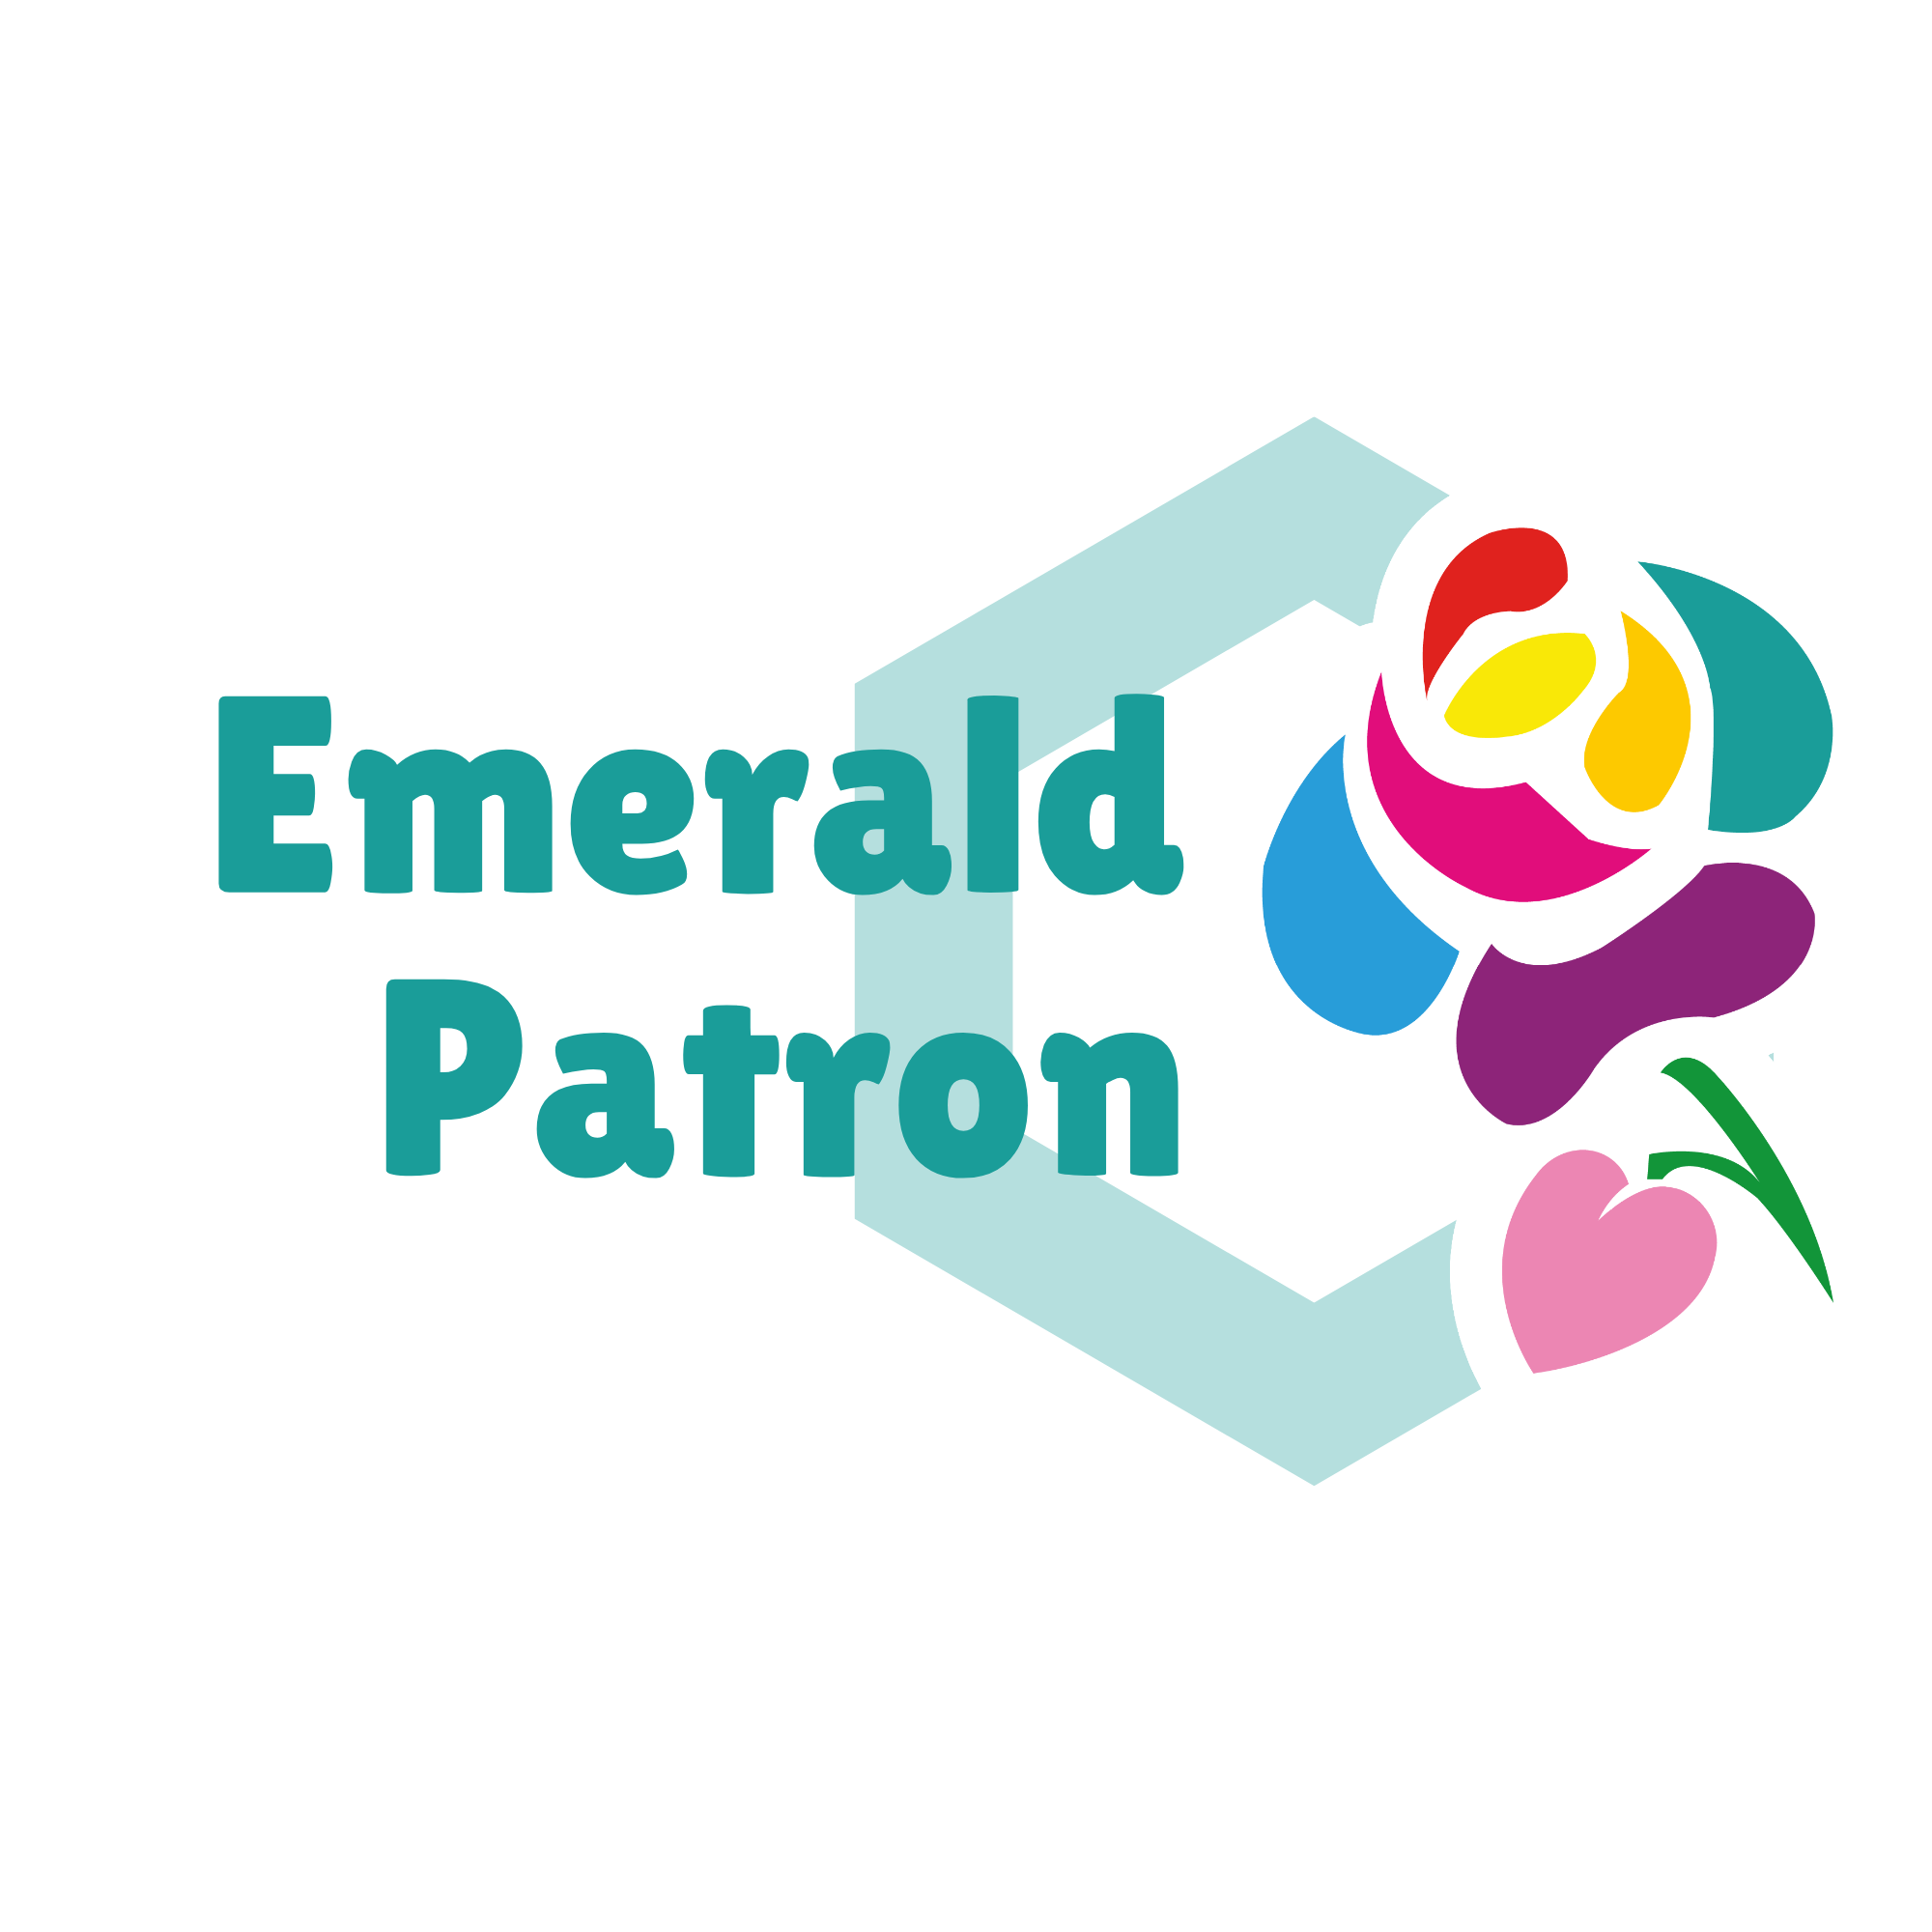 Emerald patron